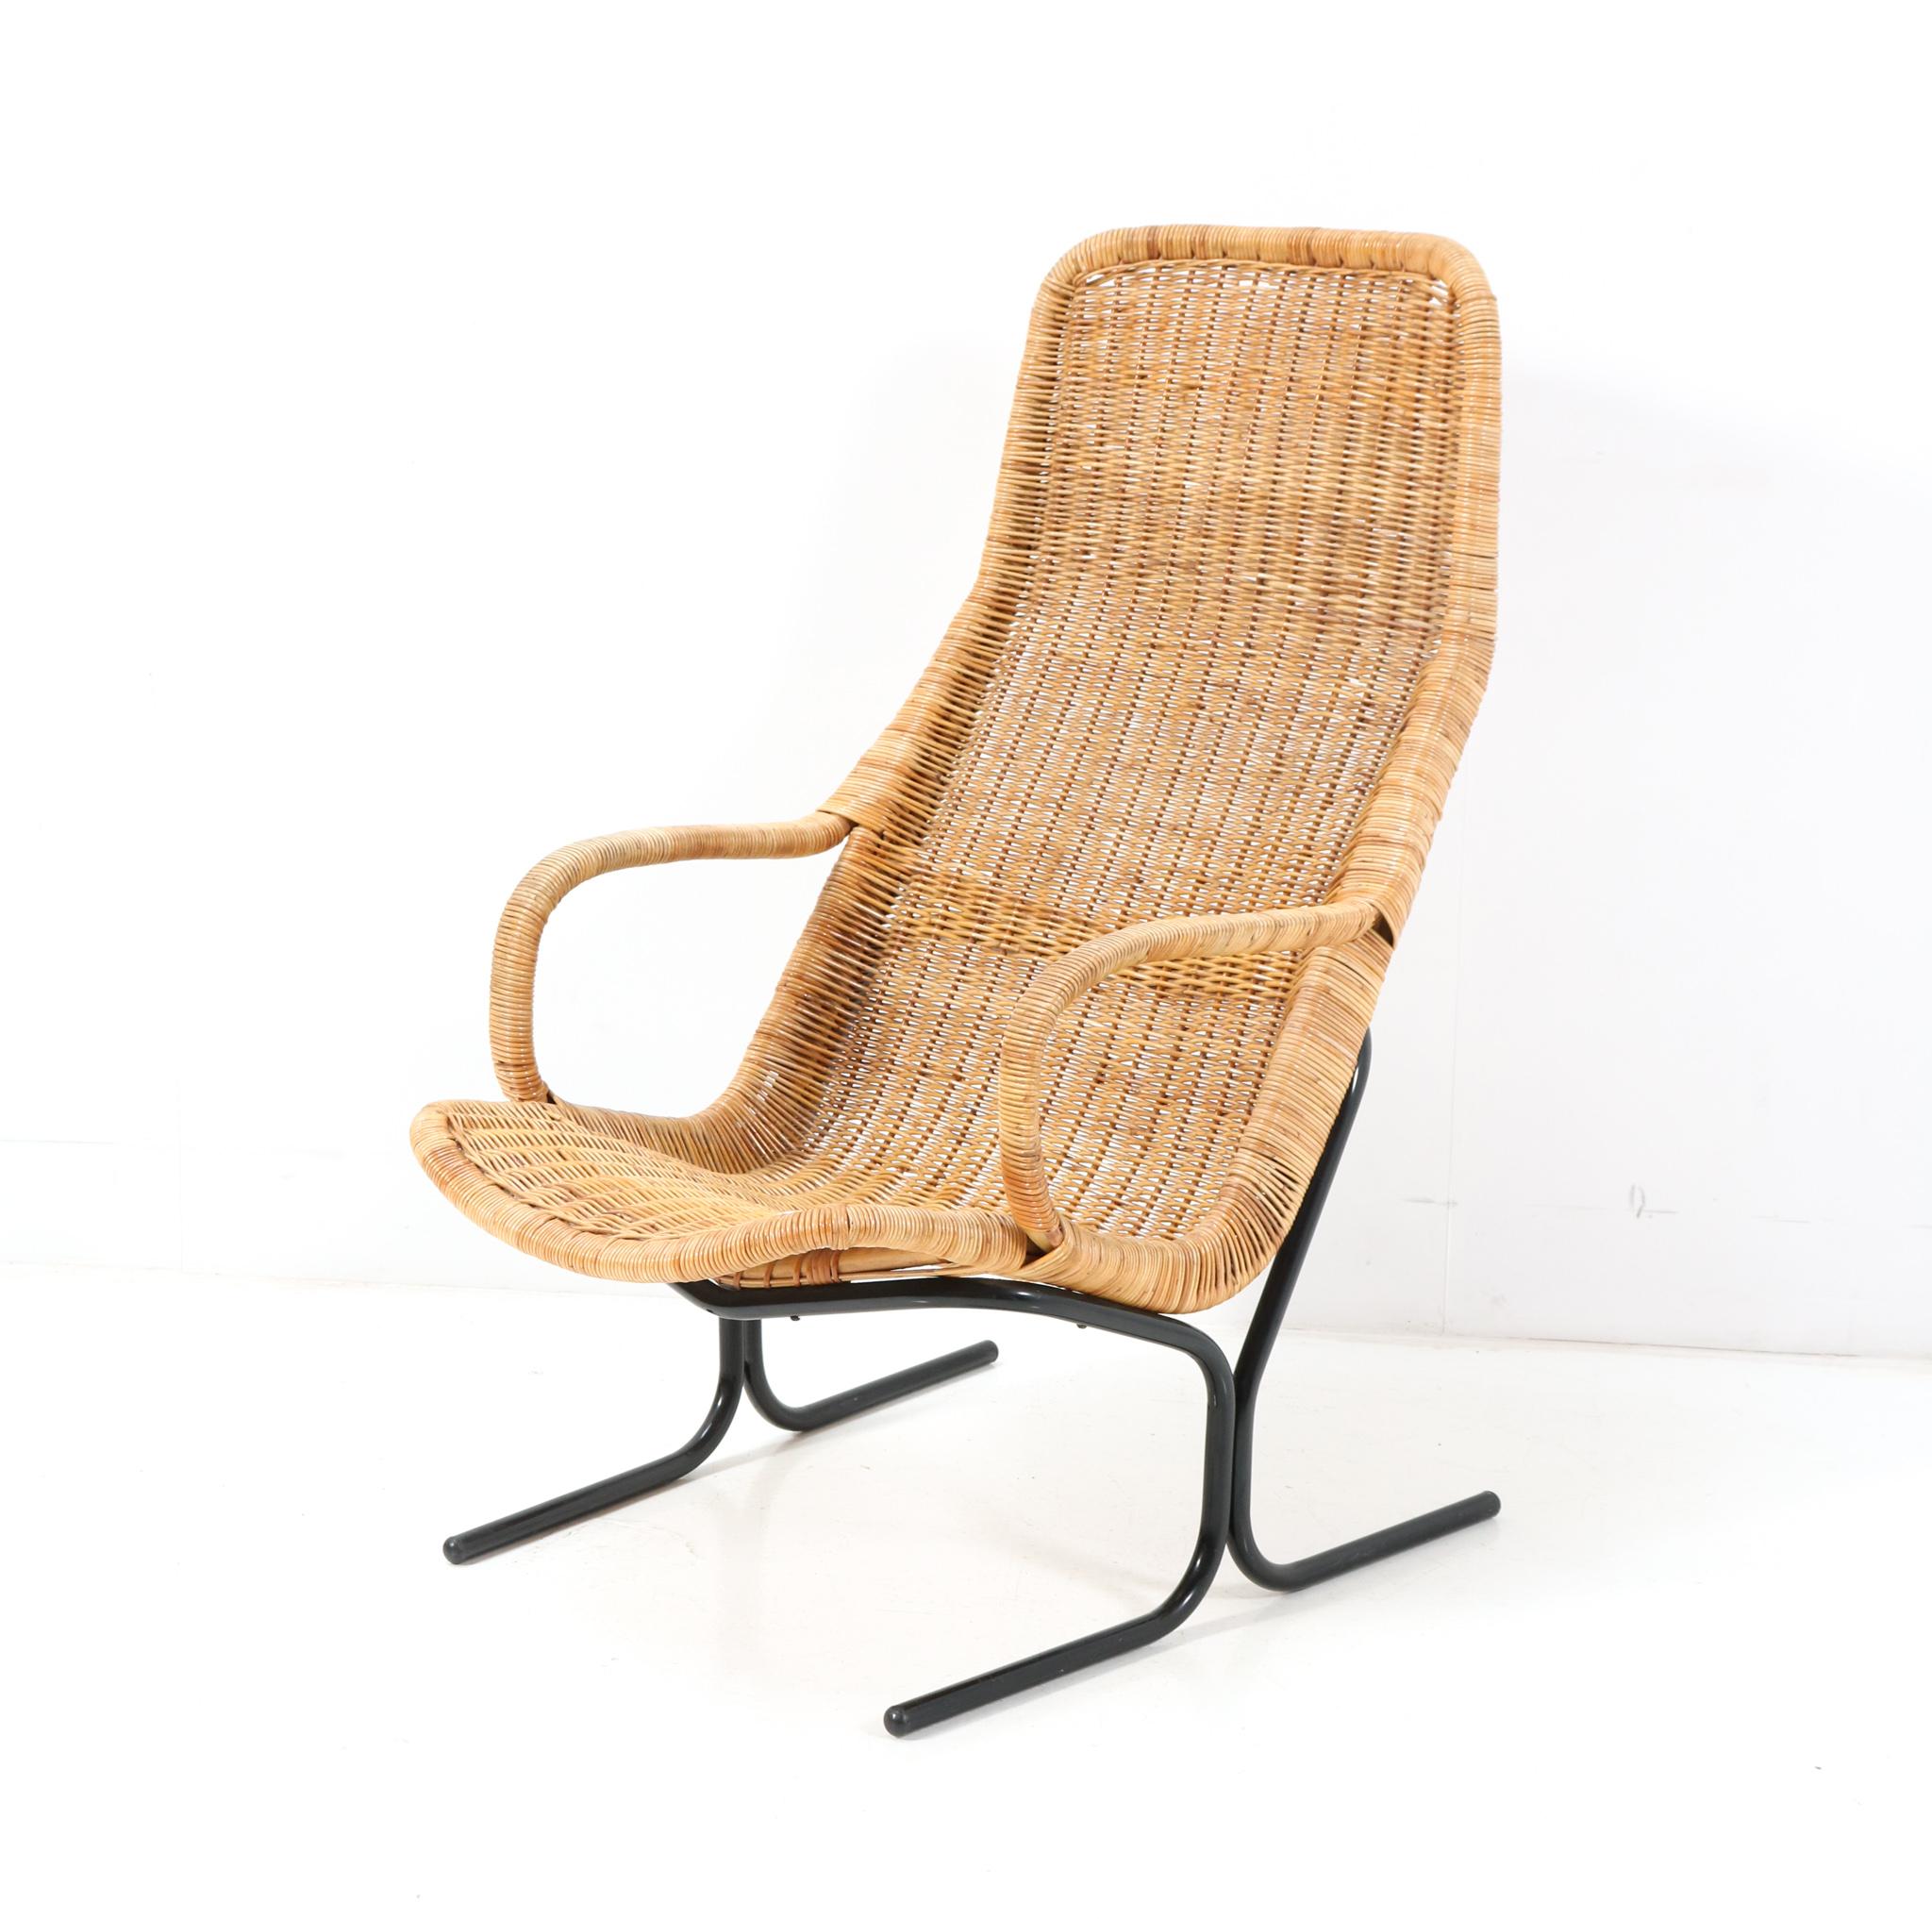 Wicker Mid-Century Modern 514 Lounge Chair by Dirk van Sliedrecht, 1961 In Good Condition For Sale In Amsterdam, NL